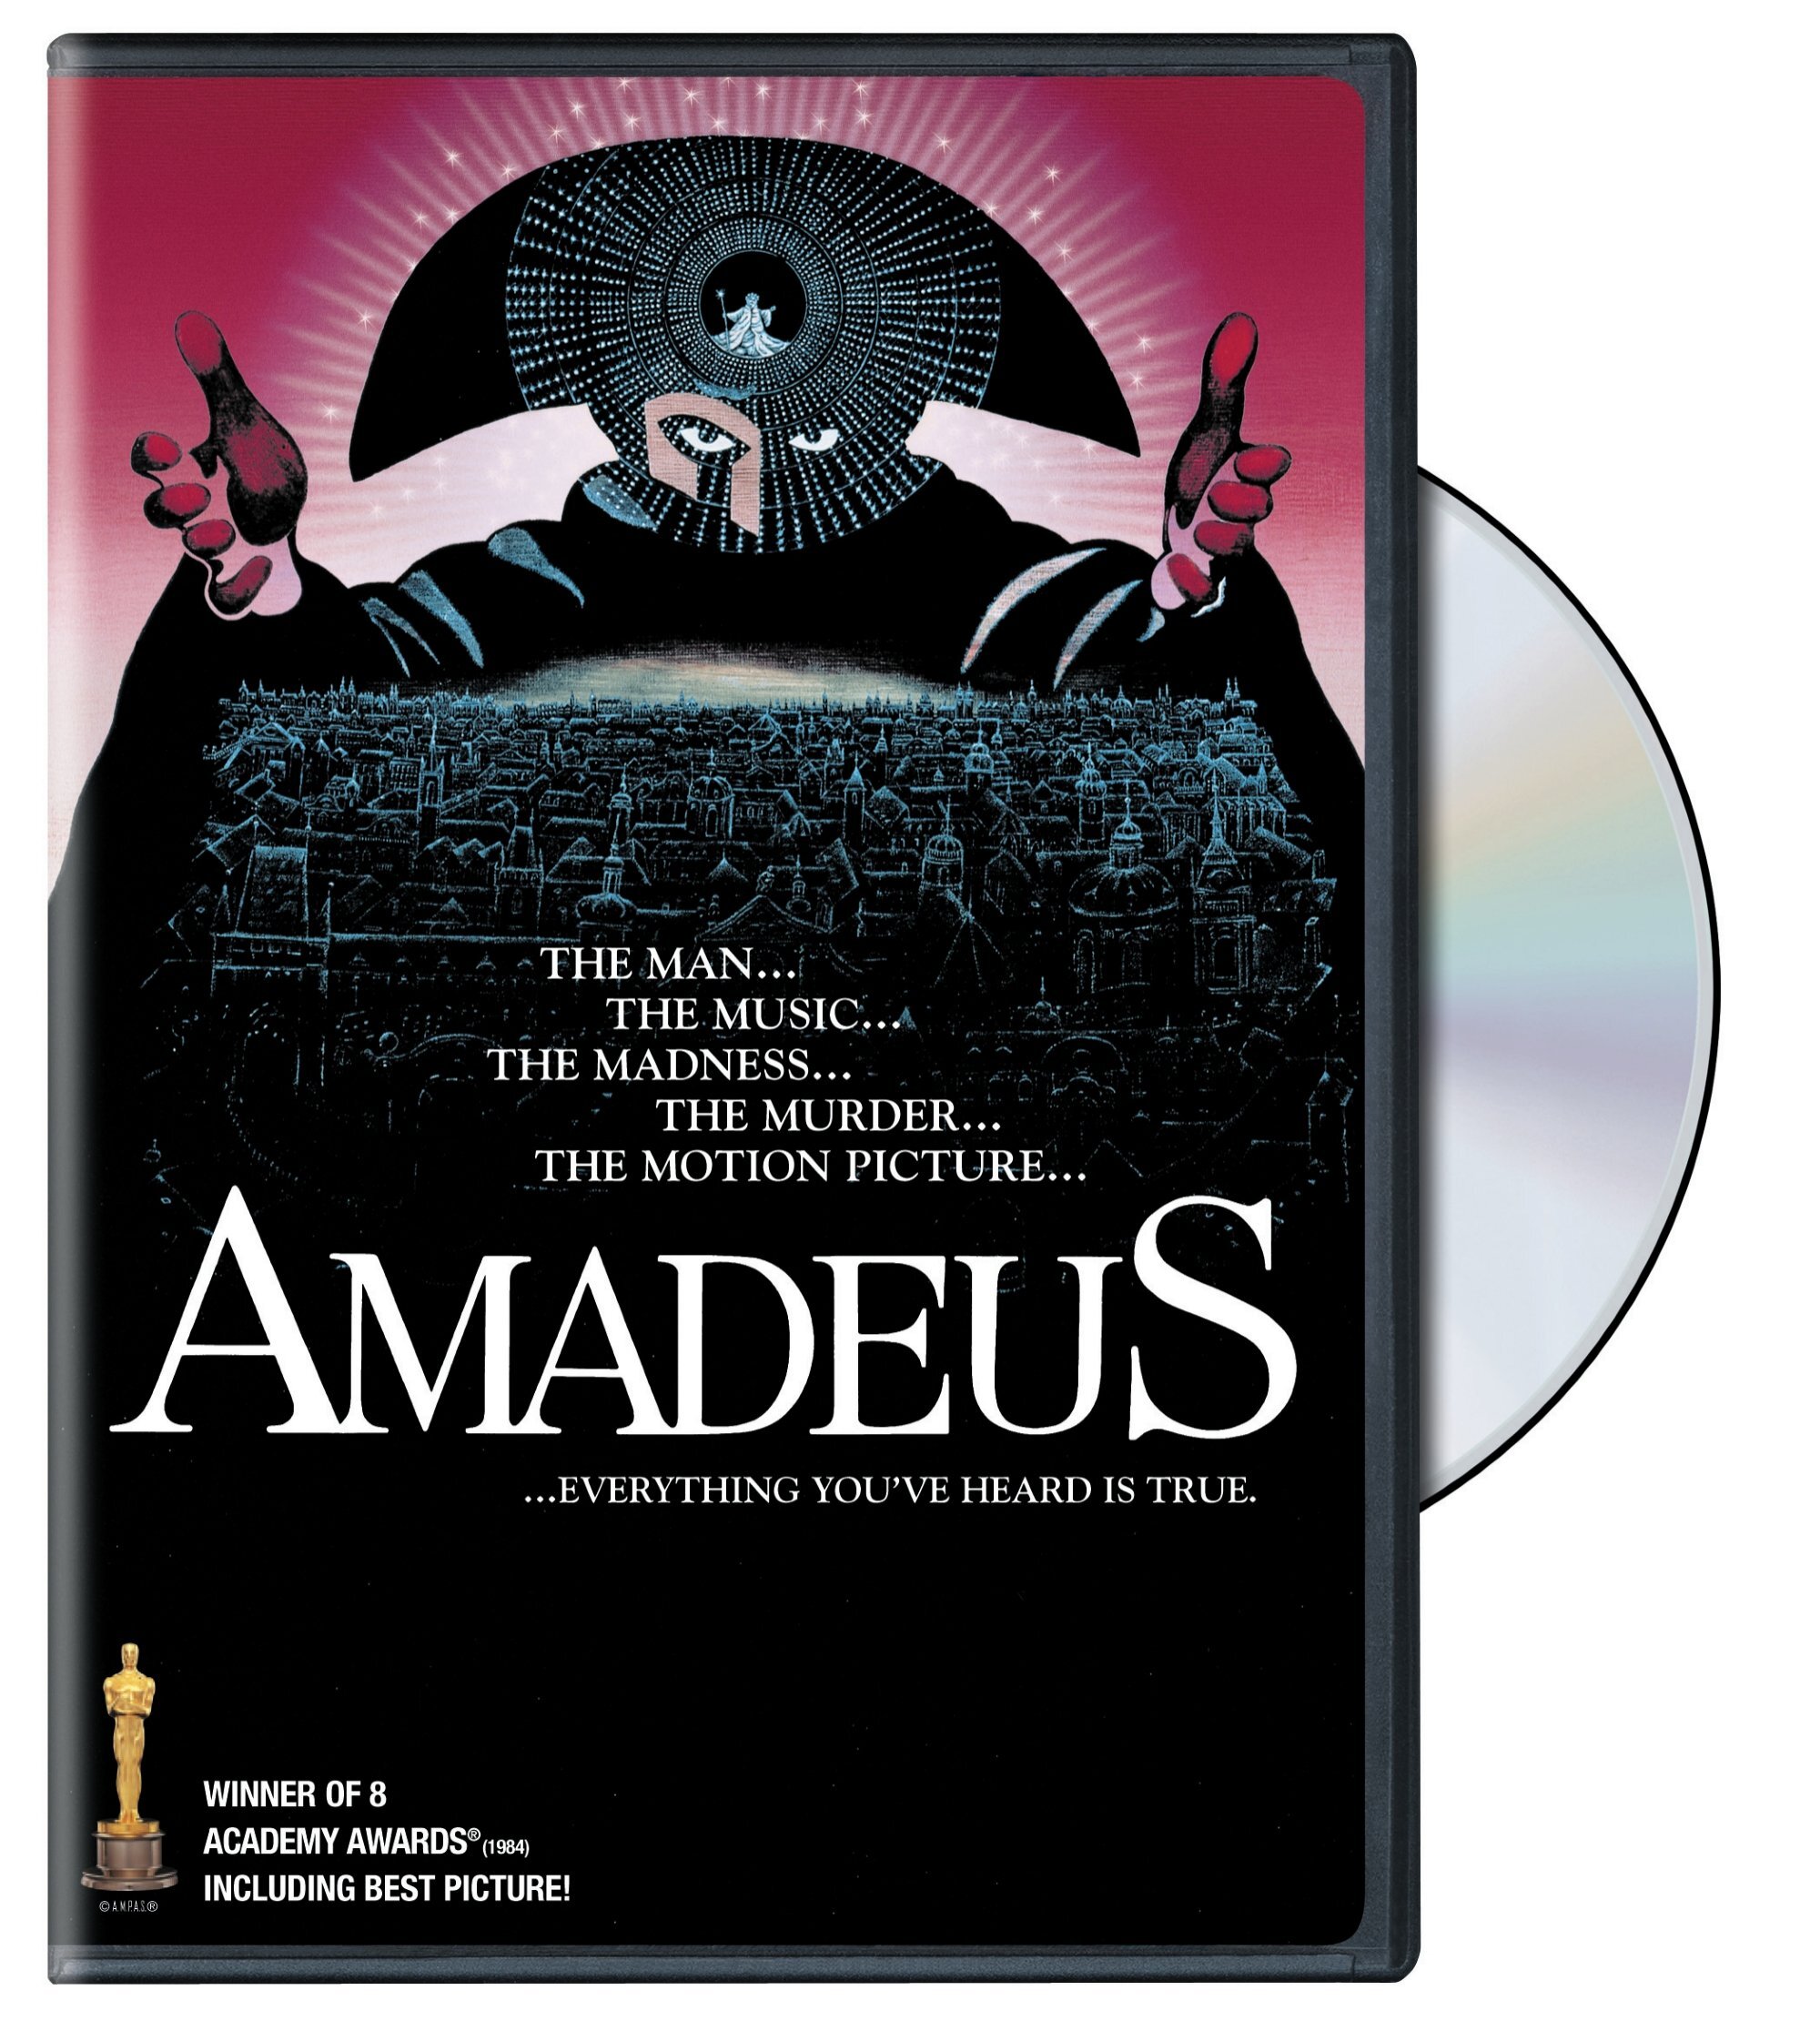 Amadeus (DVD New Packaging) - DVD [ 1984 ]  - Drama Movies On DVD - Movies On GRUV